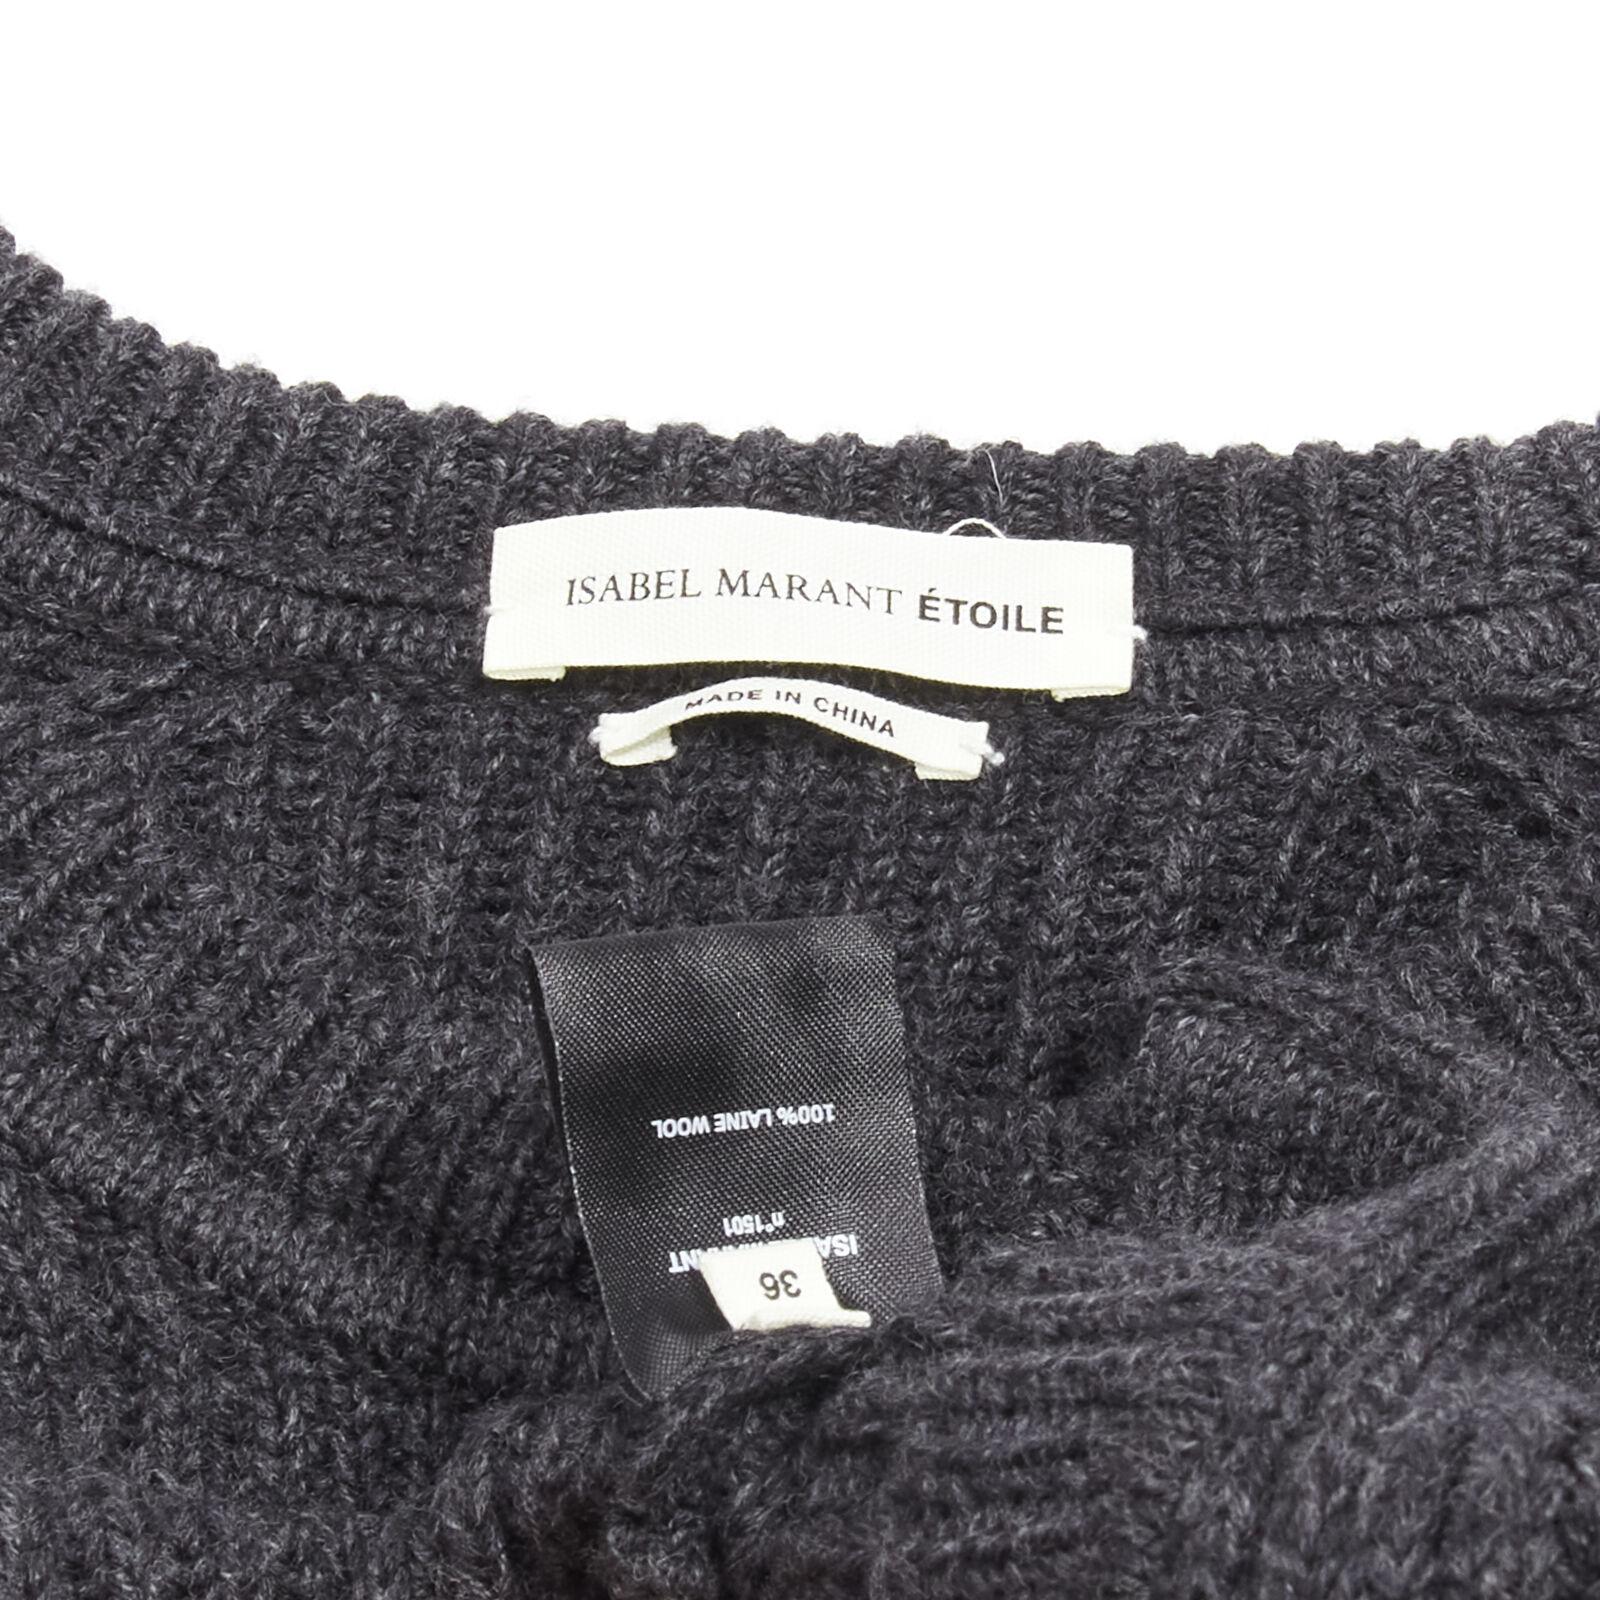 ISABEL MARANT ETOILE 100% wool dark grey side slits ribbed sweater FR36 S 4